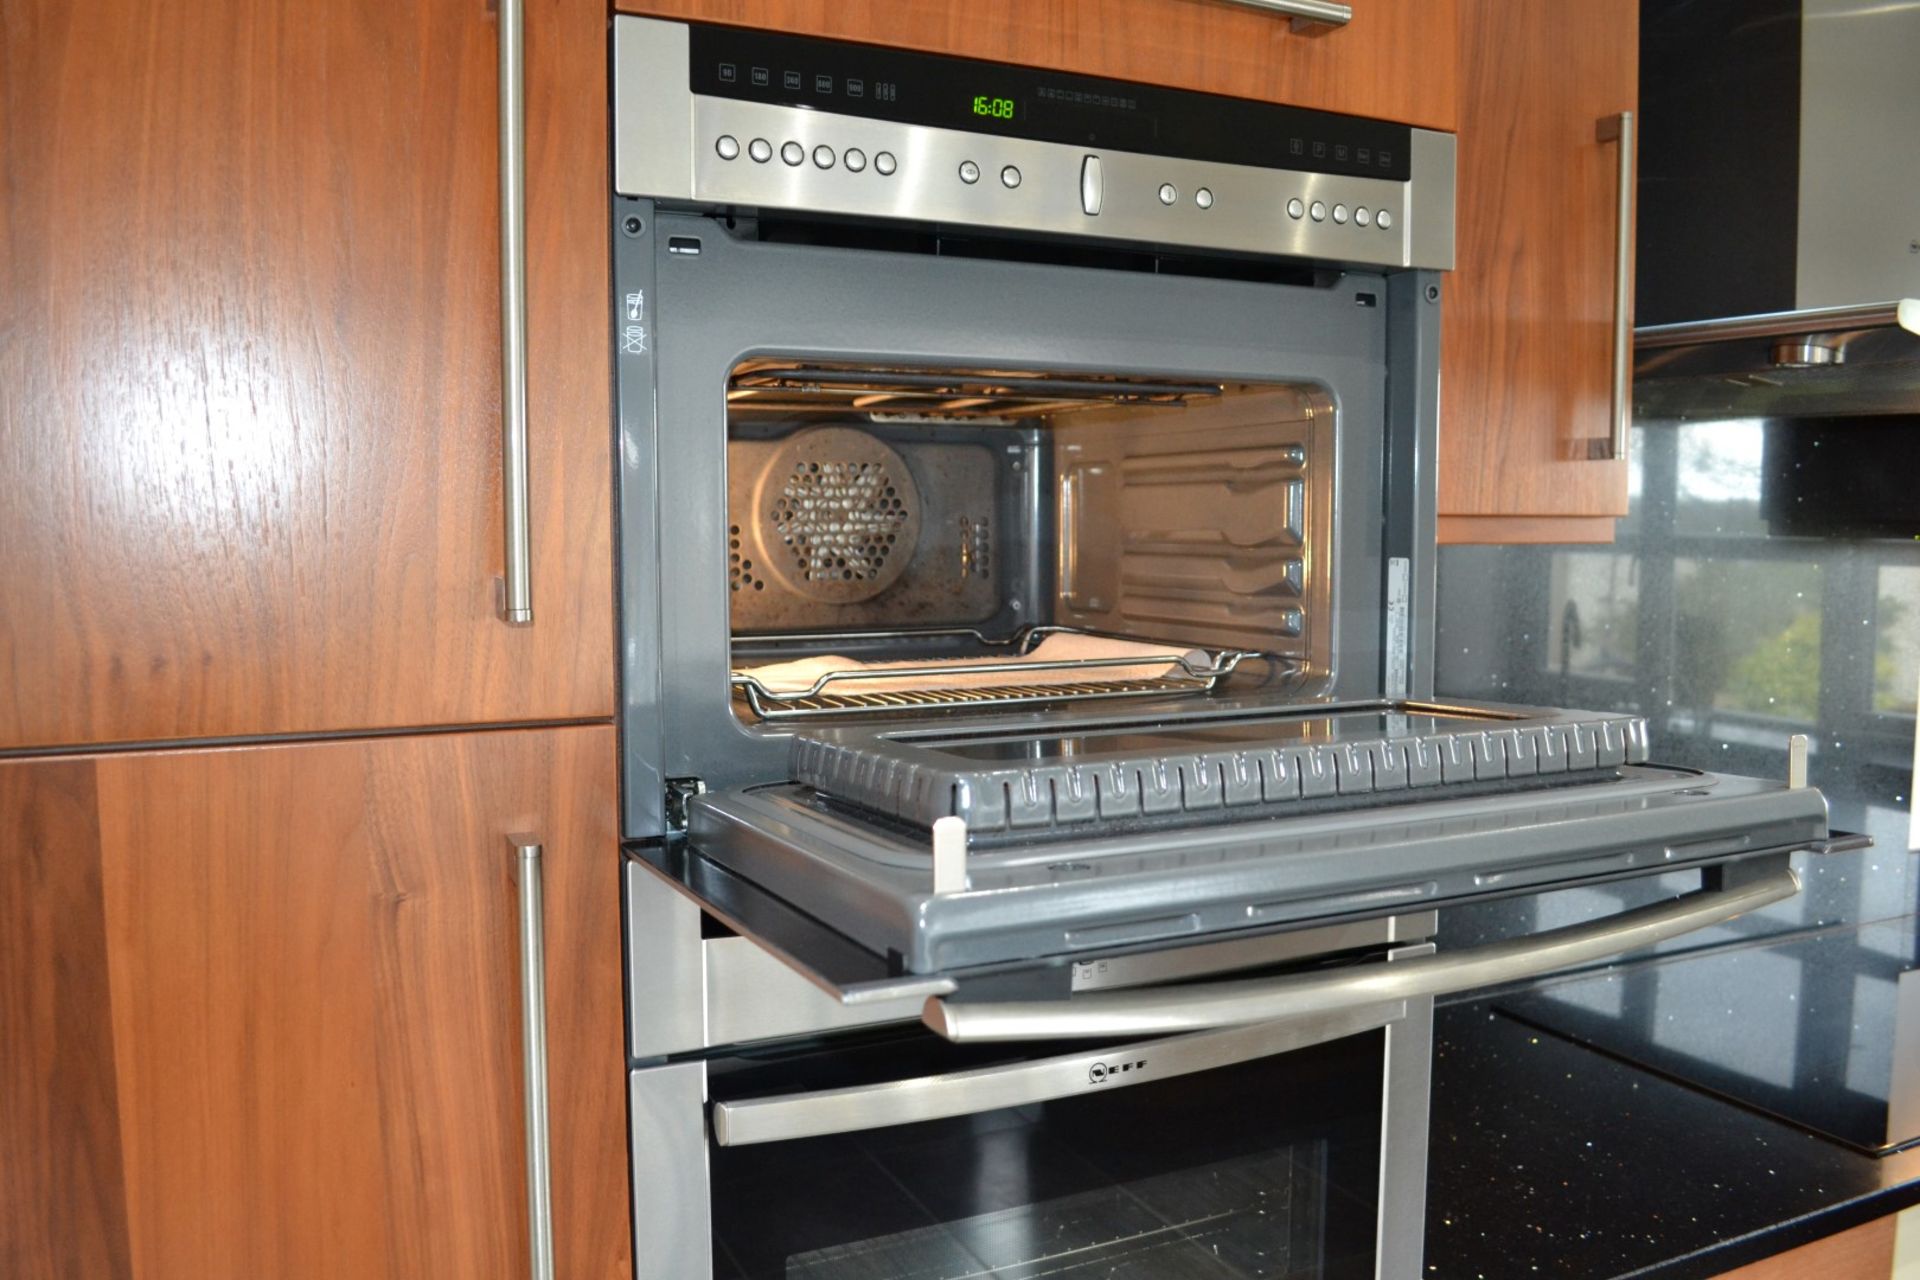 1 x Kitchen Design Bespoke Fitted Kitchen With Silestone Worktops & Neff Appliances - Superb - Image 44 of 59